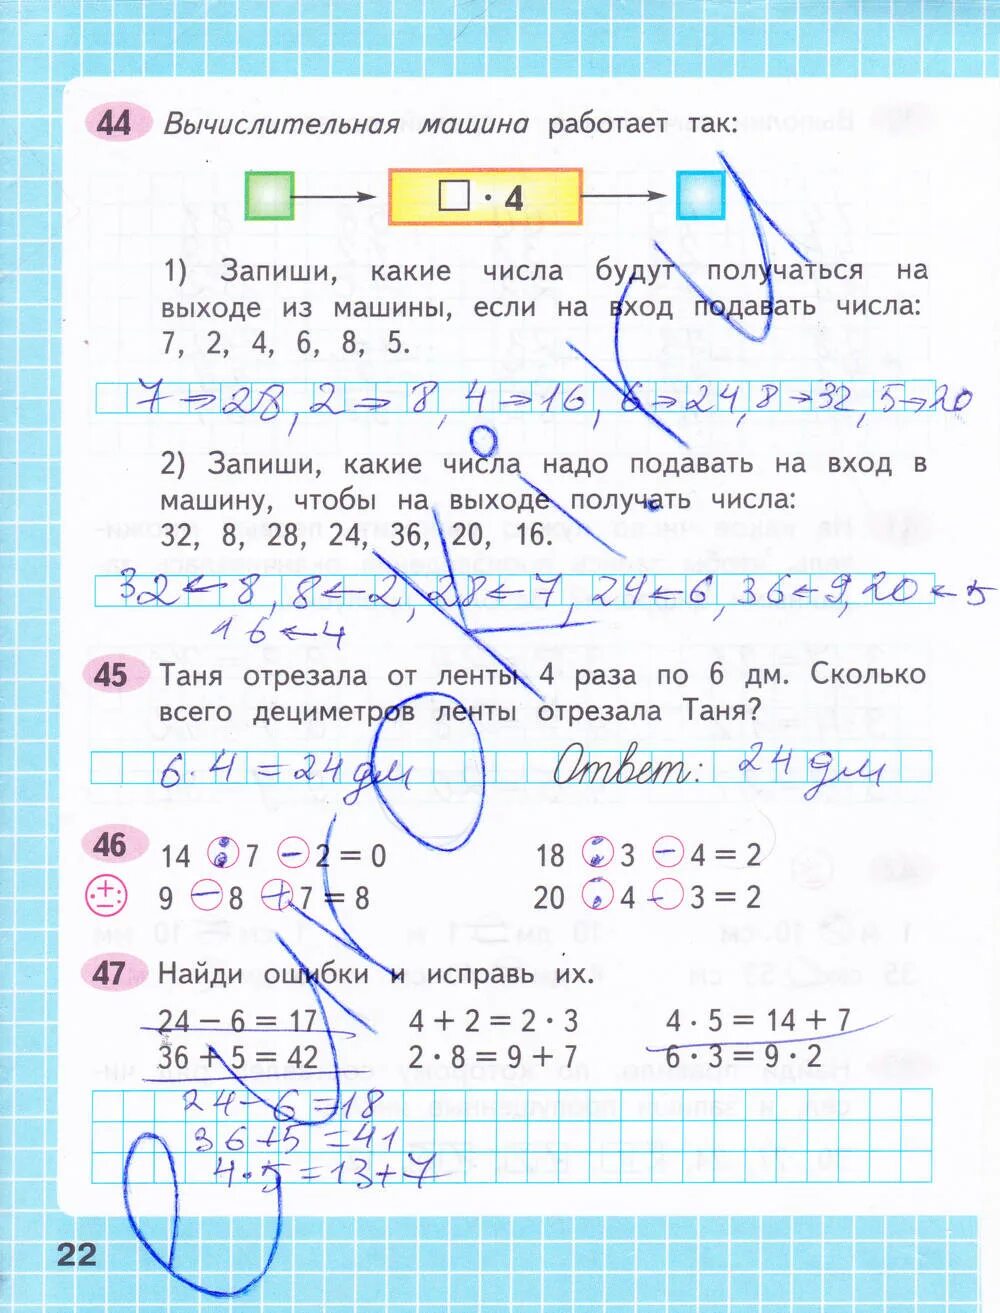 Рабочая тетрадь четвертый класс страница 22. Математика 3 класс 1 часть рабочая тетрадь стр 22-23.